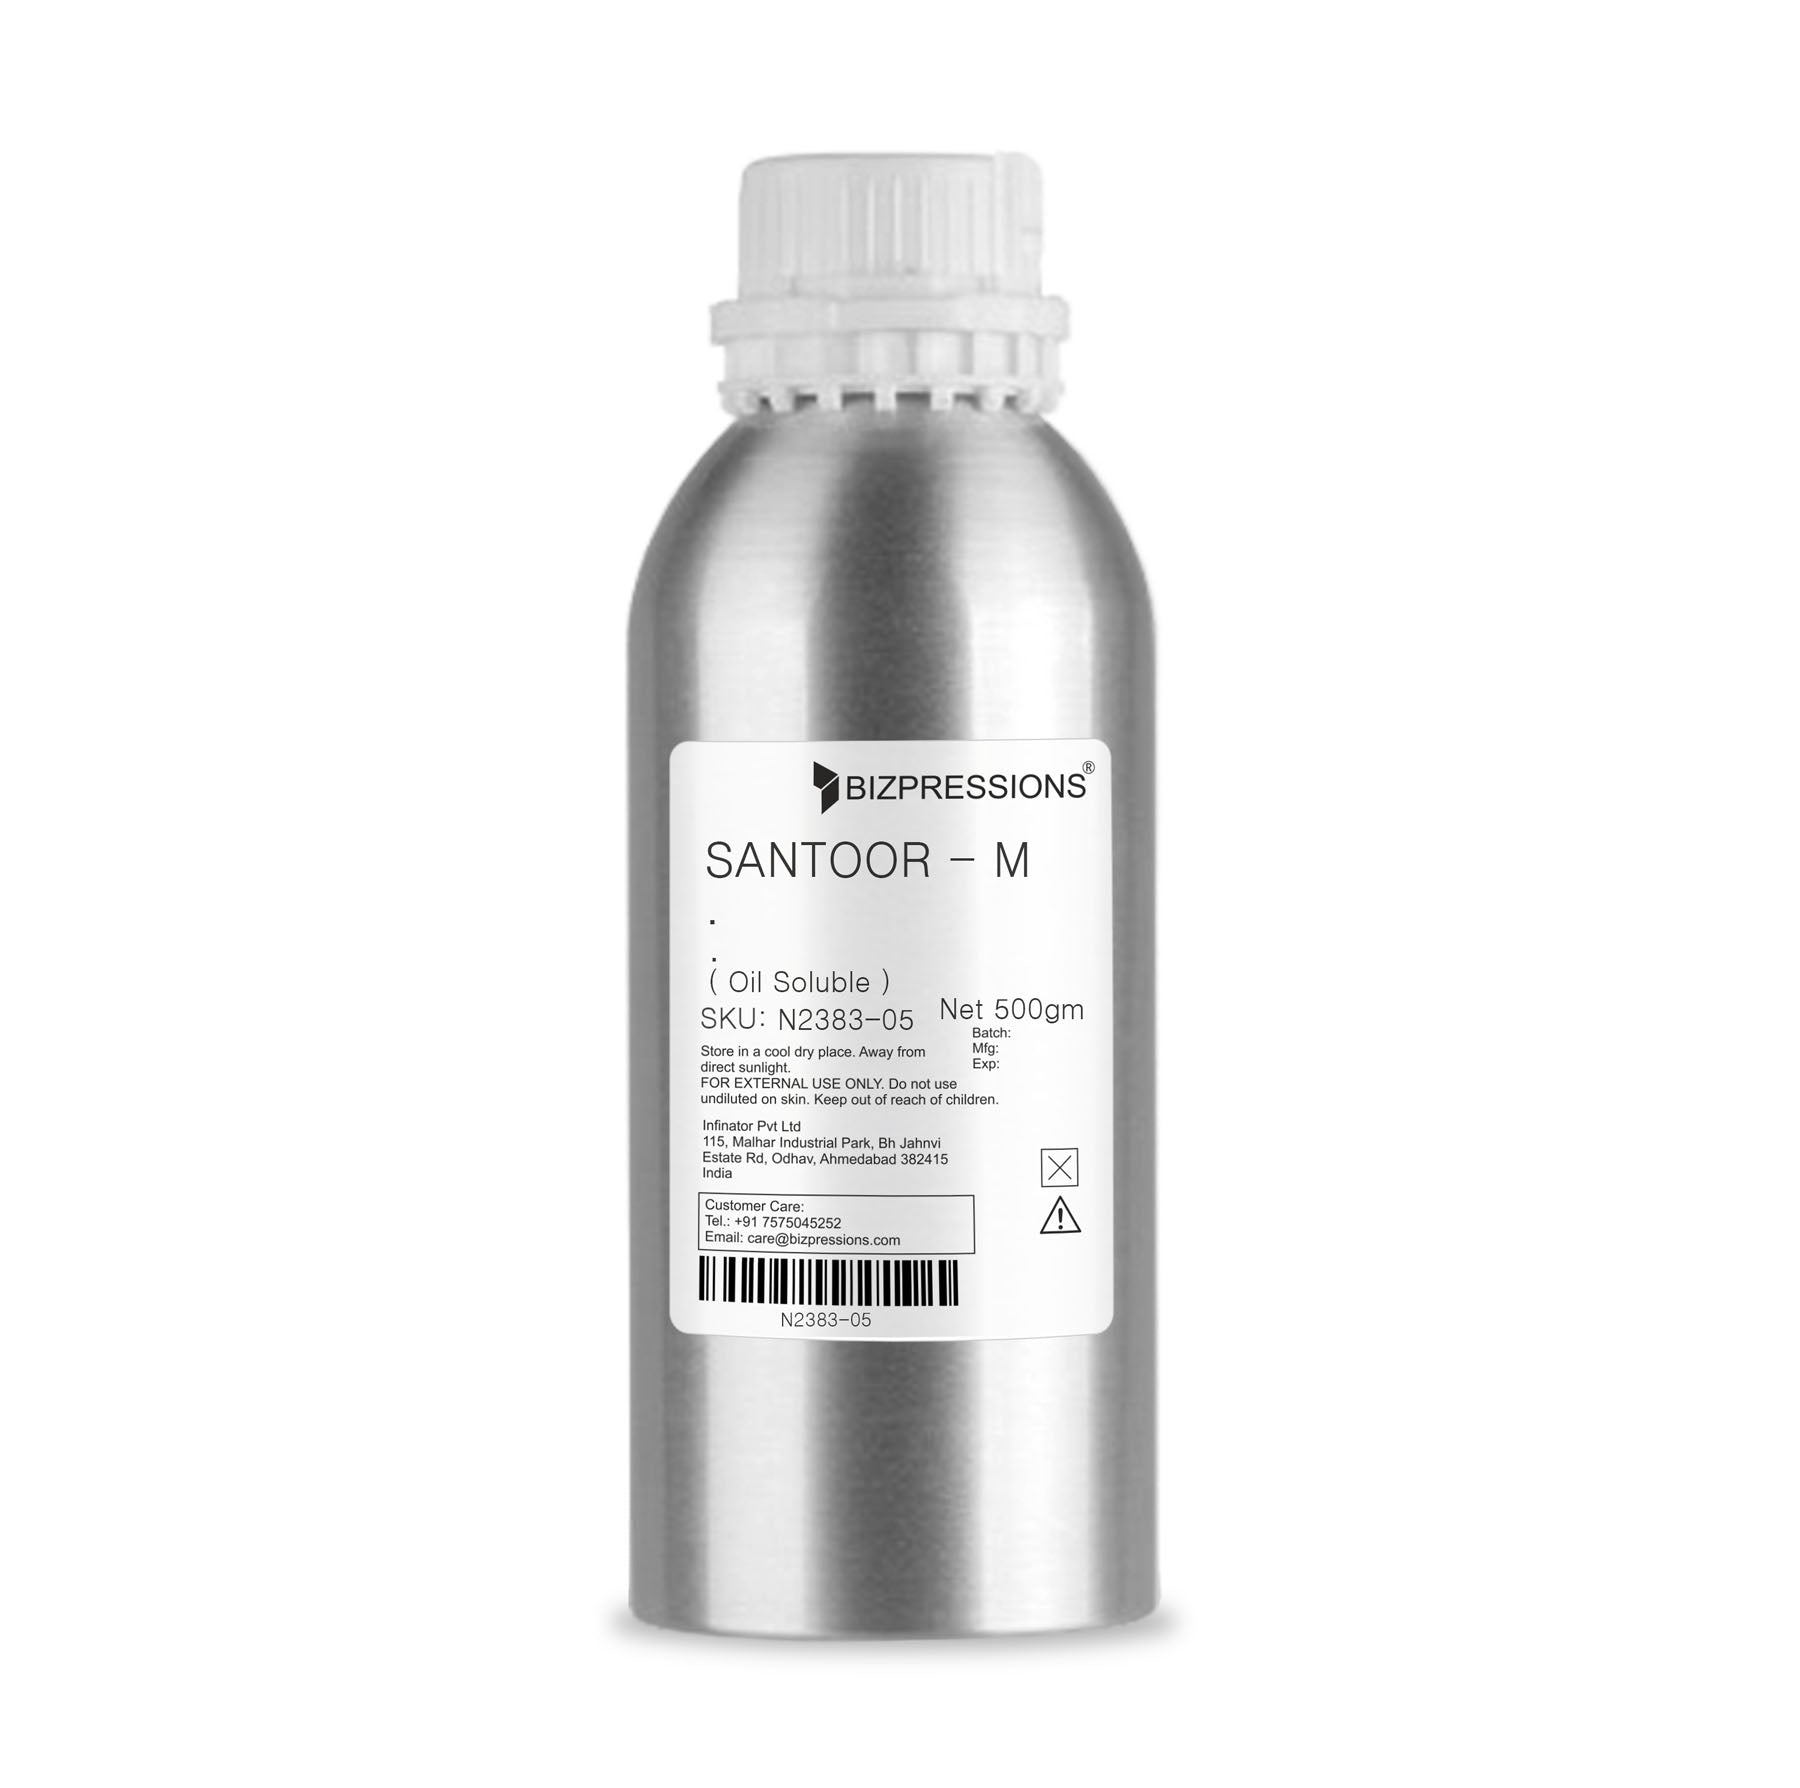 SANTOOR - M - Fragrance ( Oil Soluble ) - 500 gm